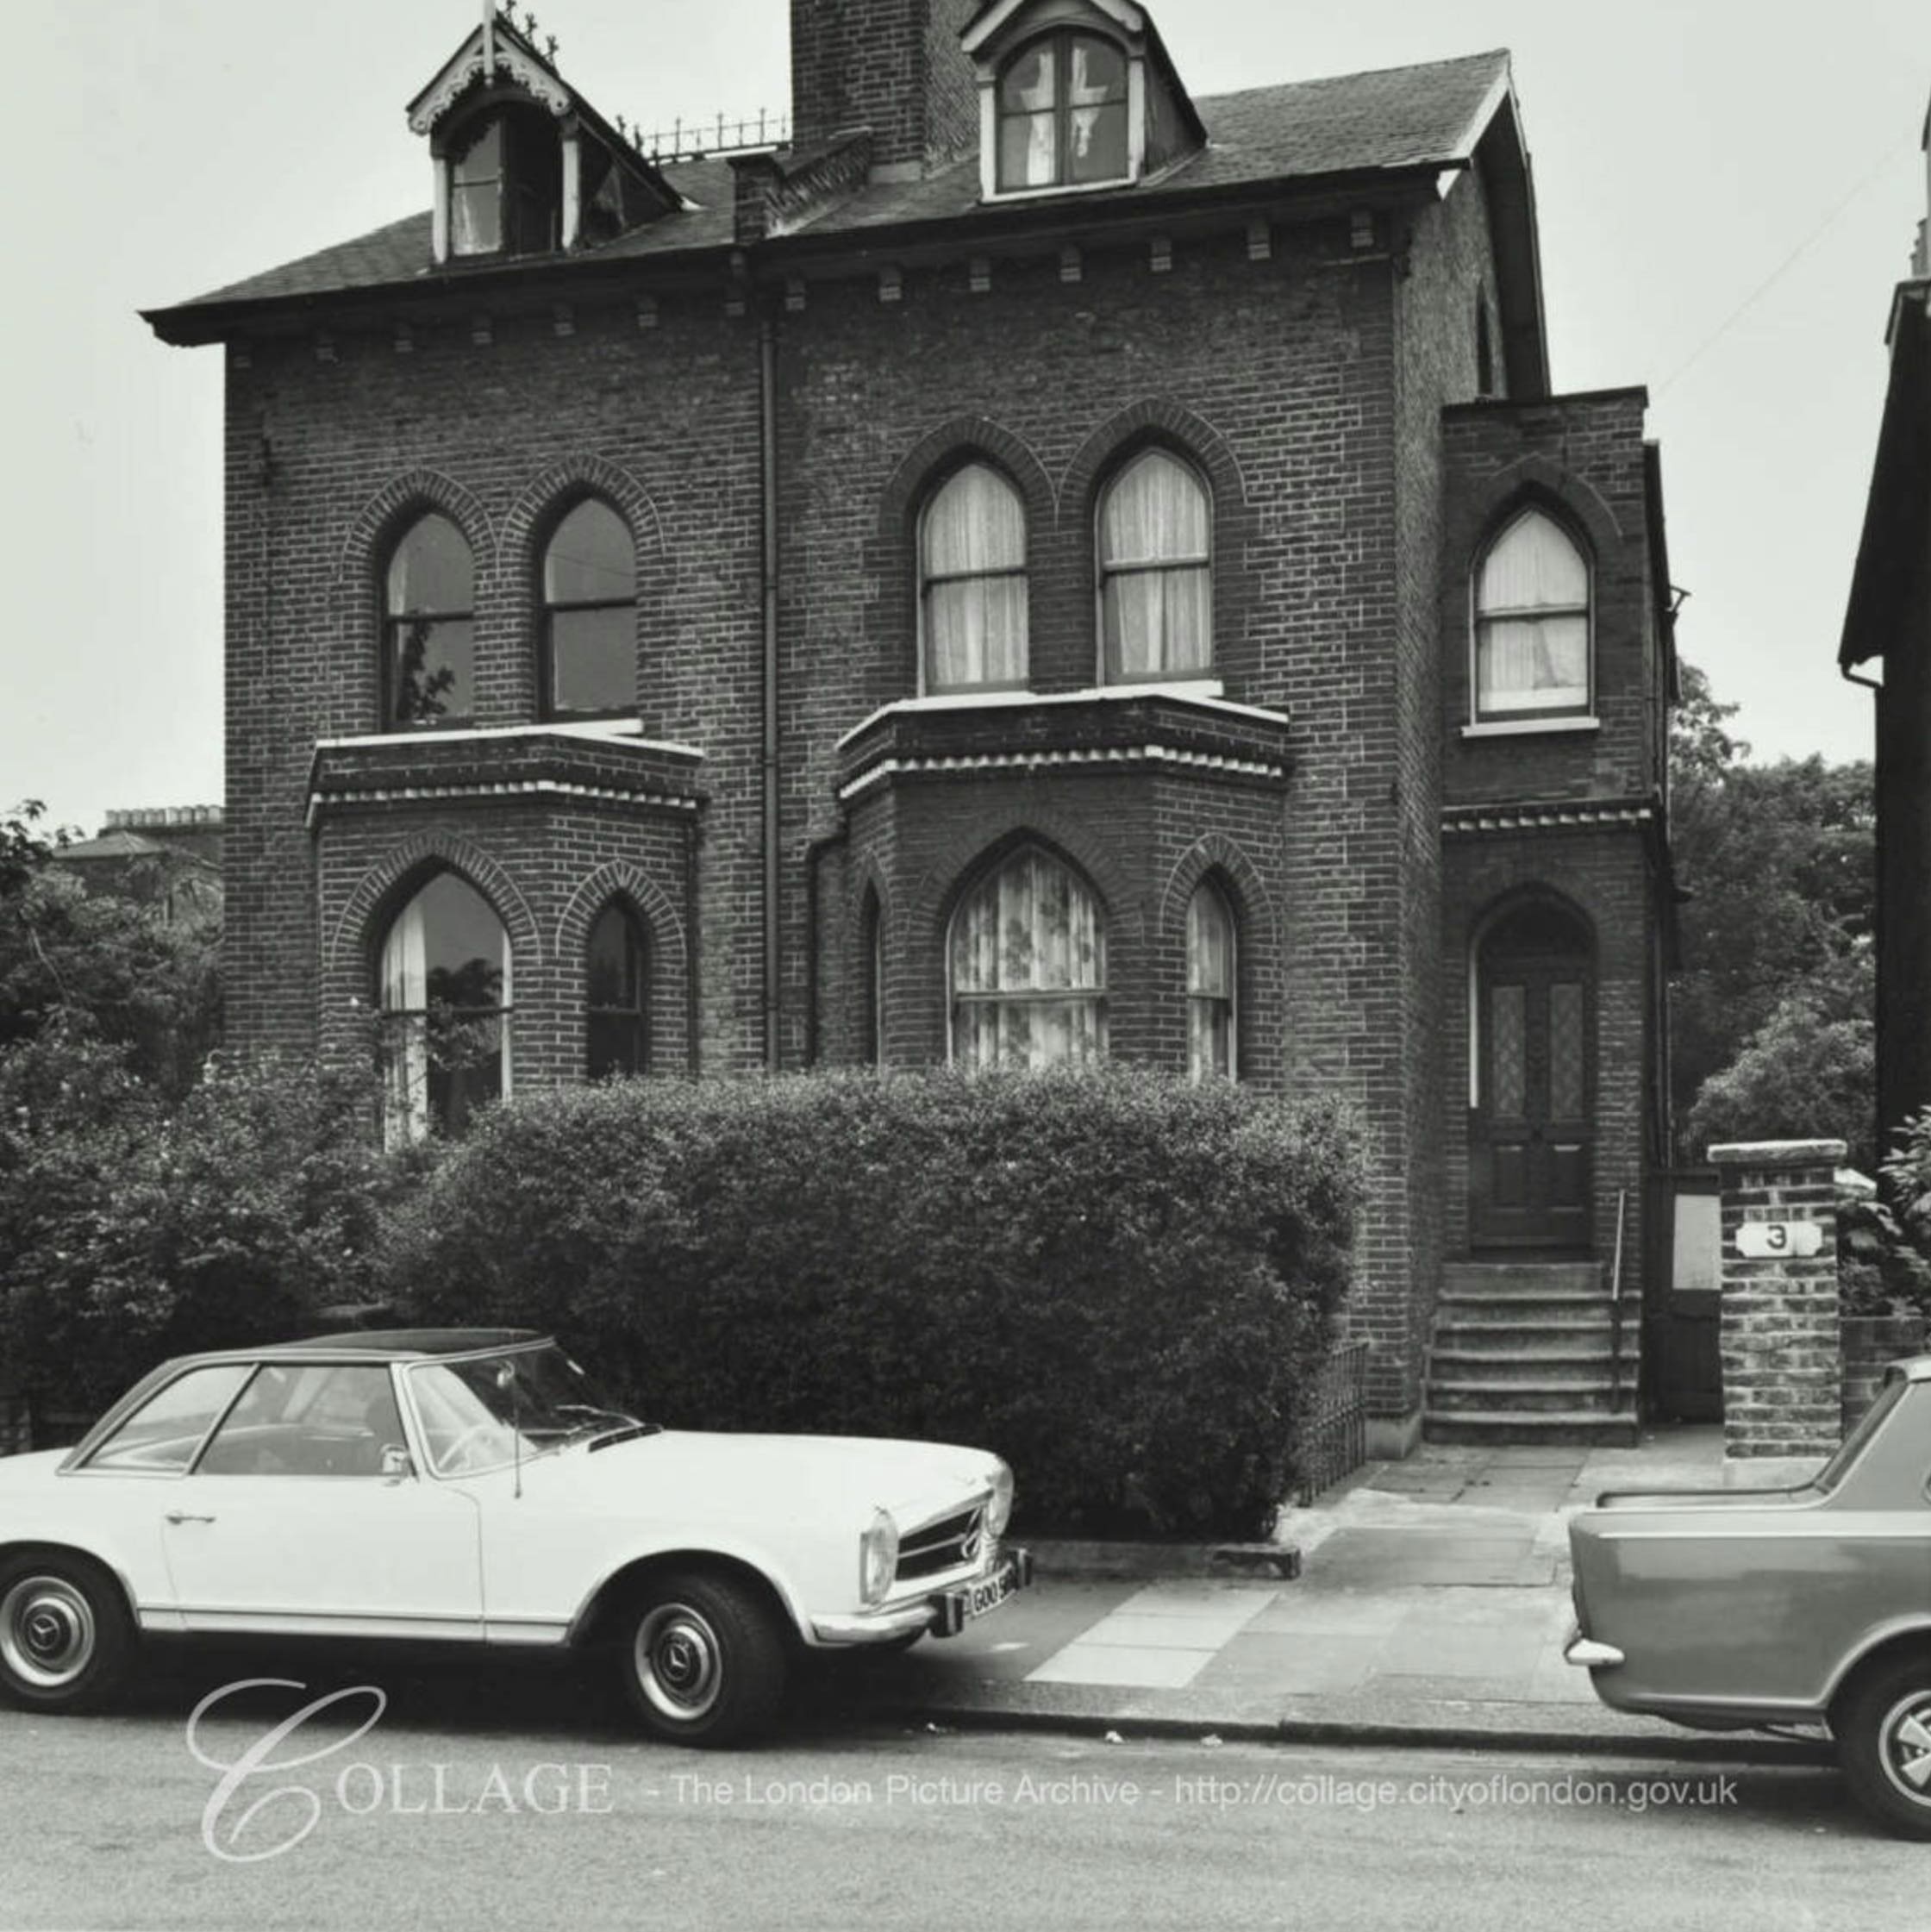 London Collage Archive a treasure trove for classic car fans